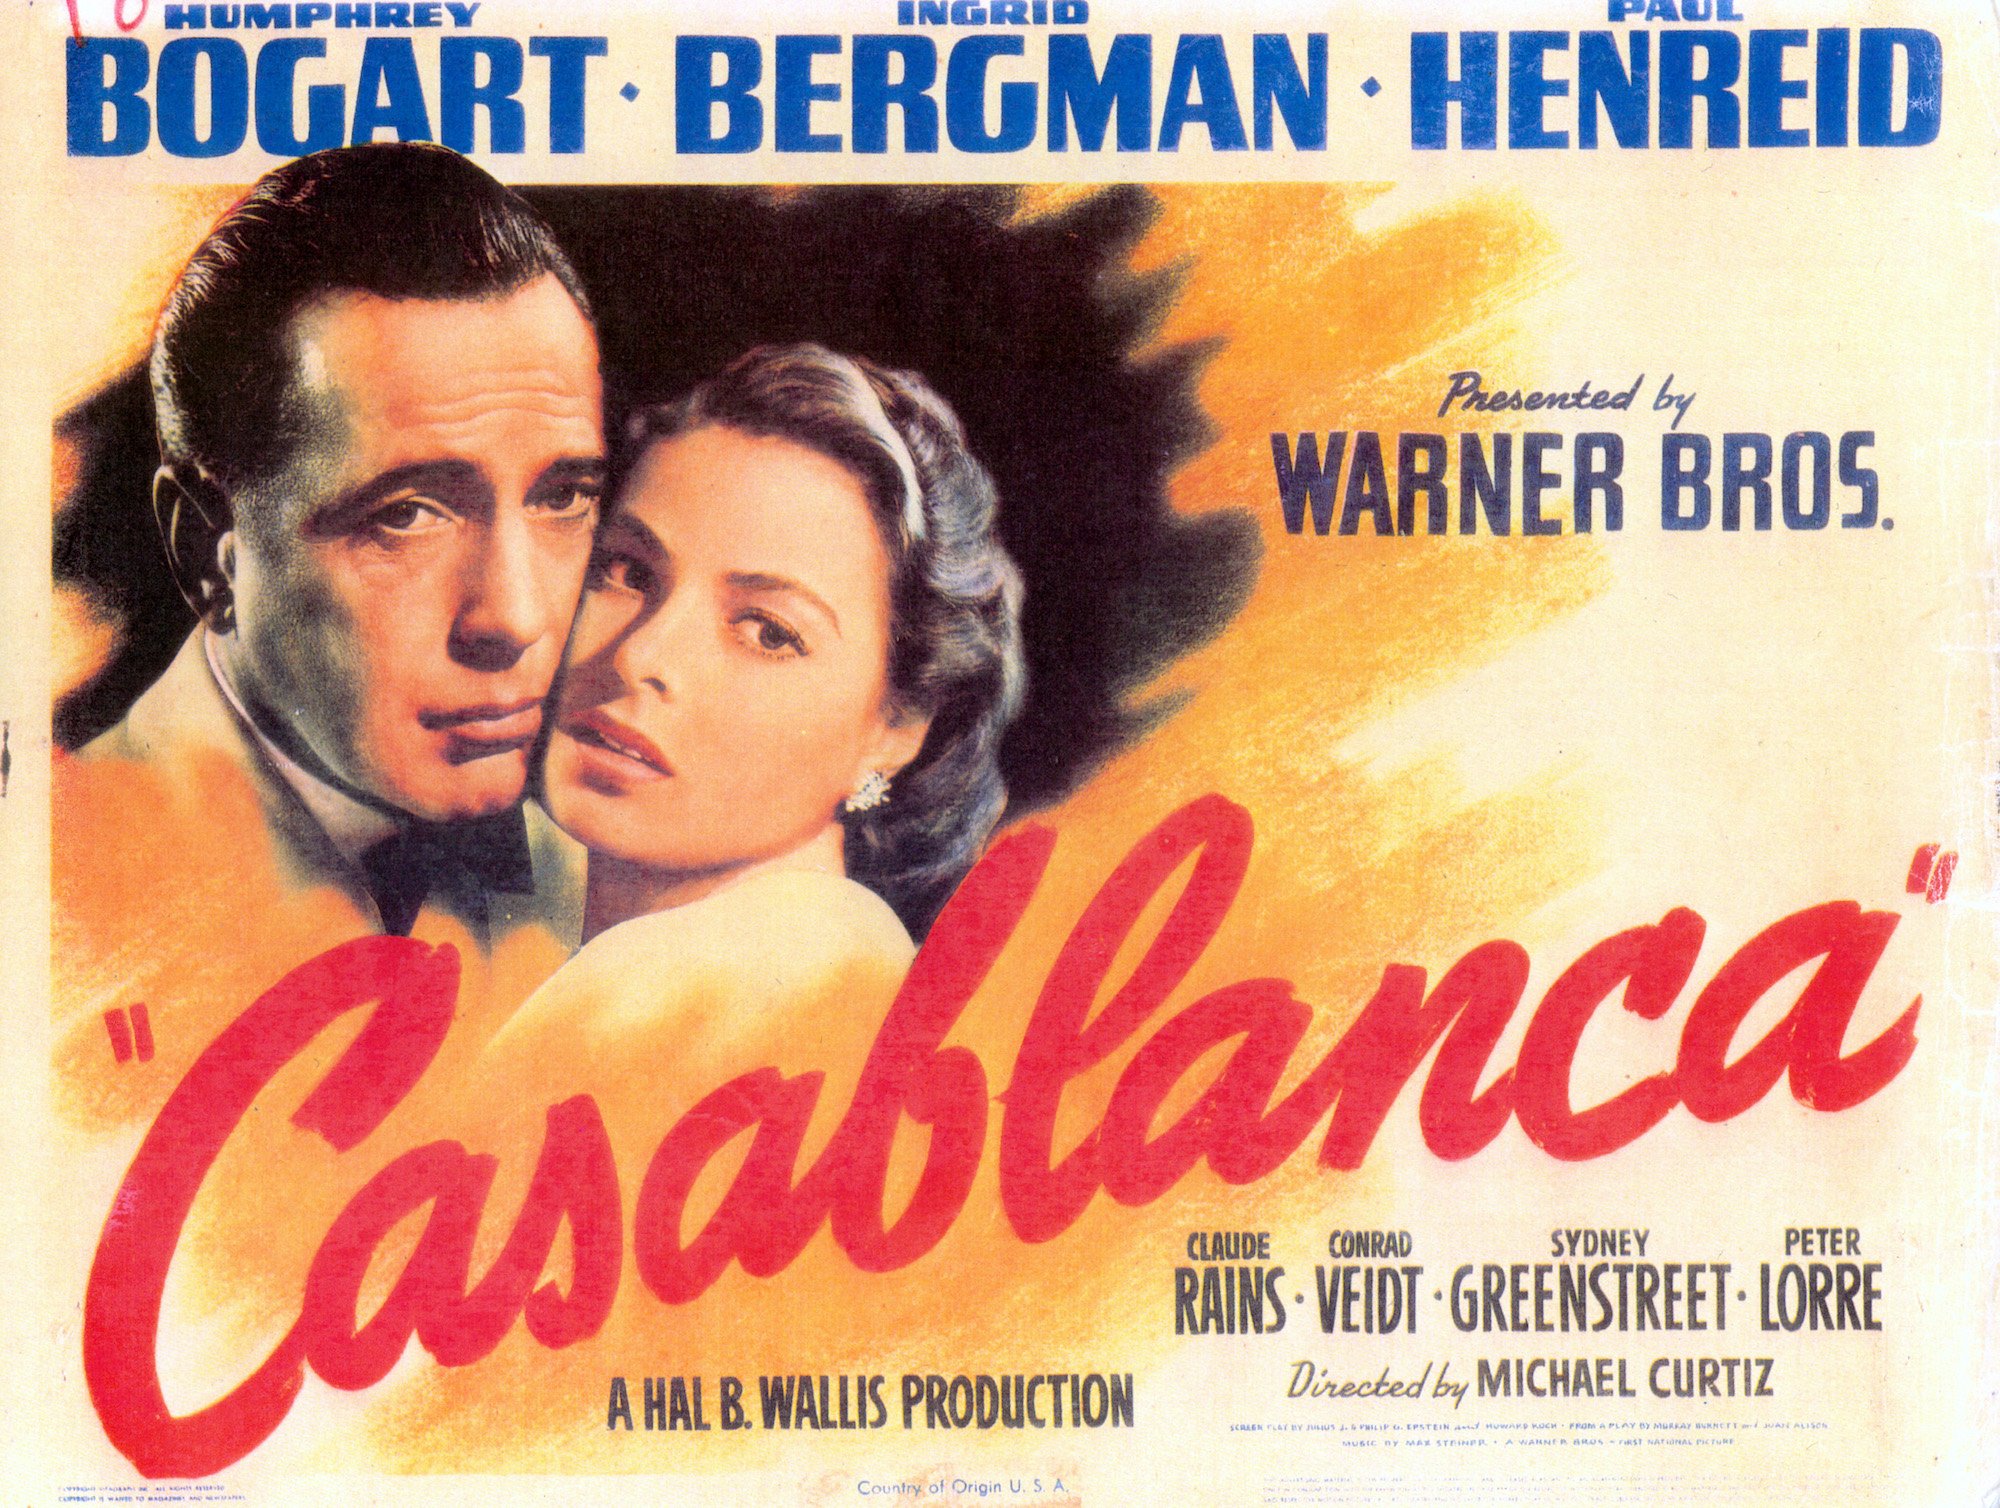 Humphrey Bogart and Ingrid Bergman in movie art for the film 'Casablanca'